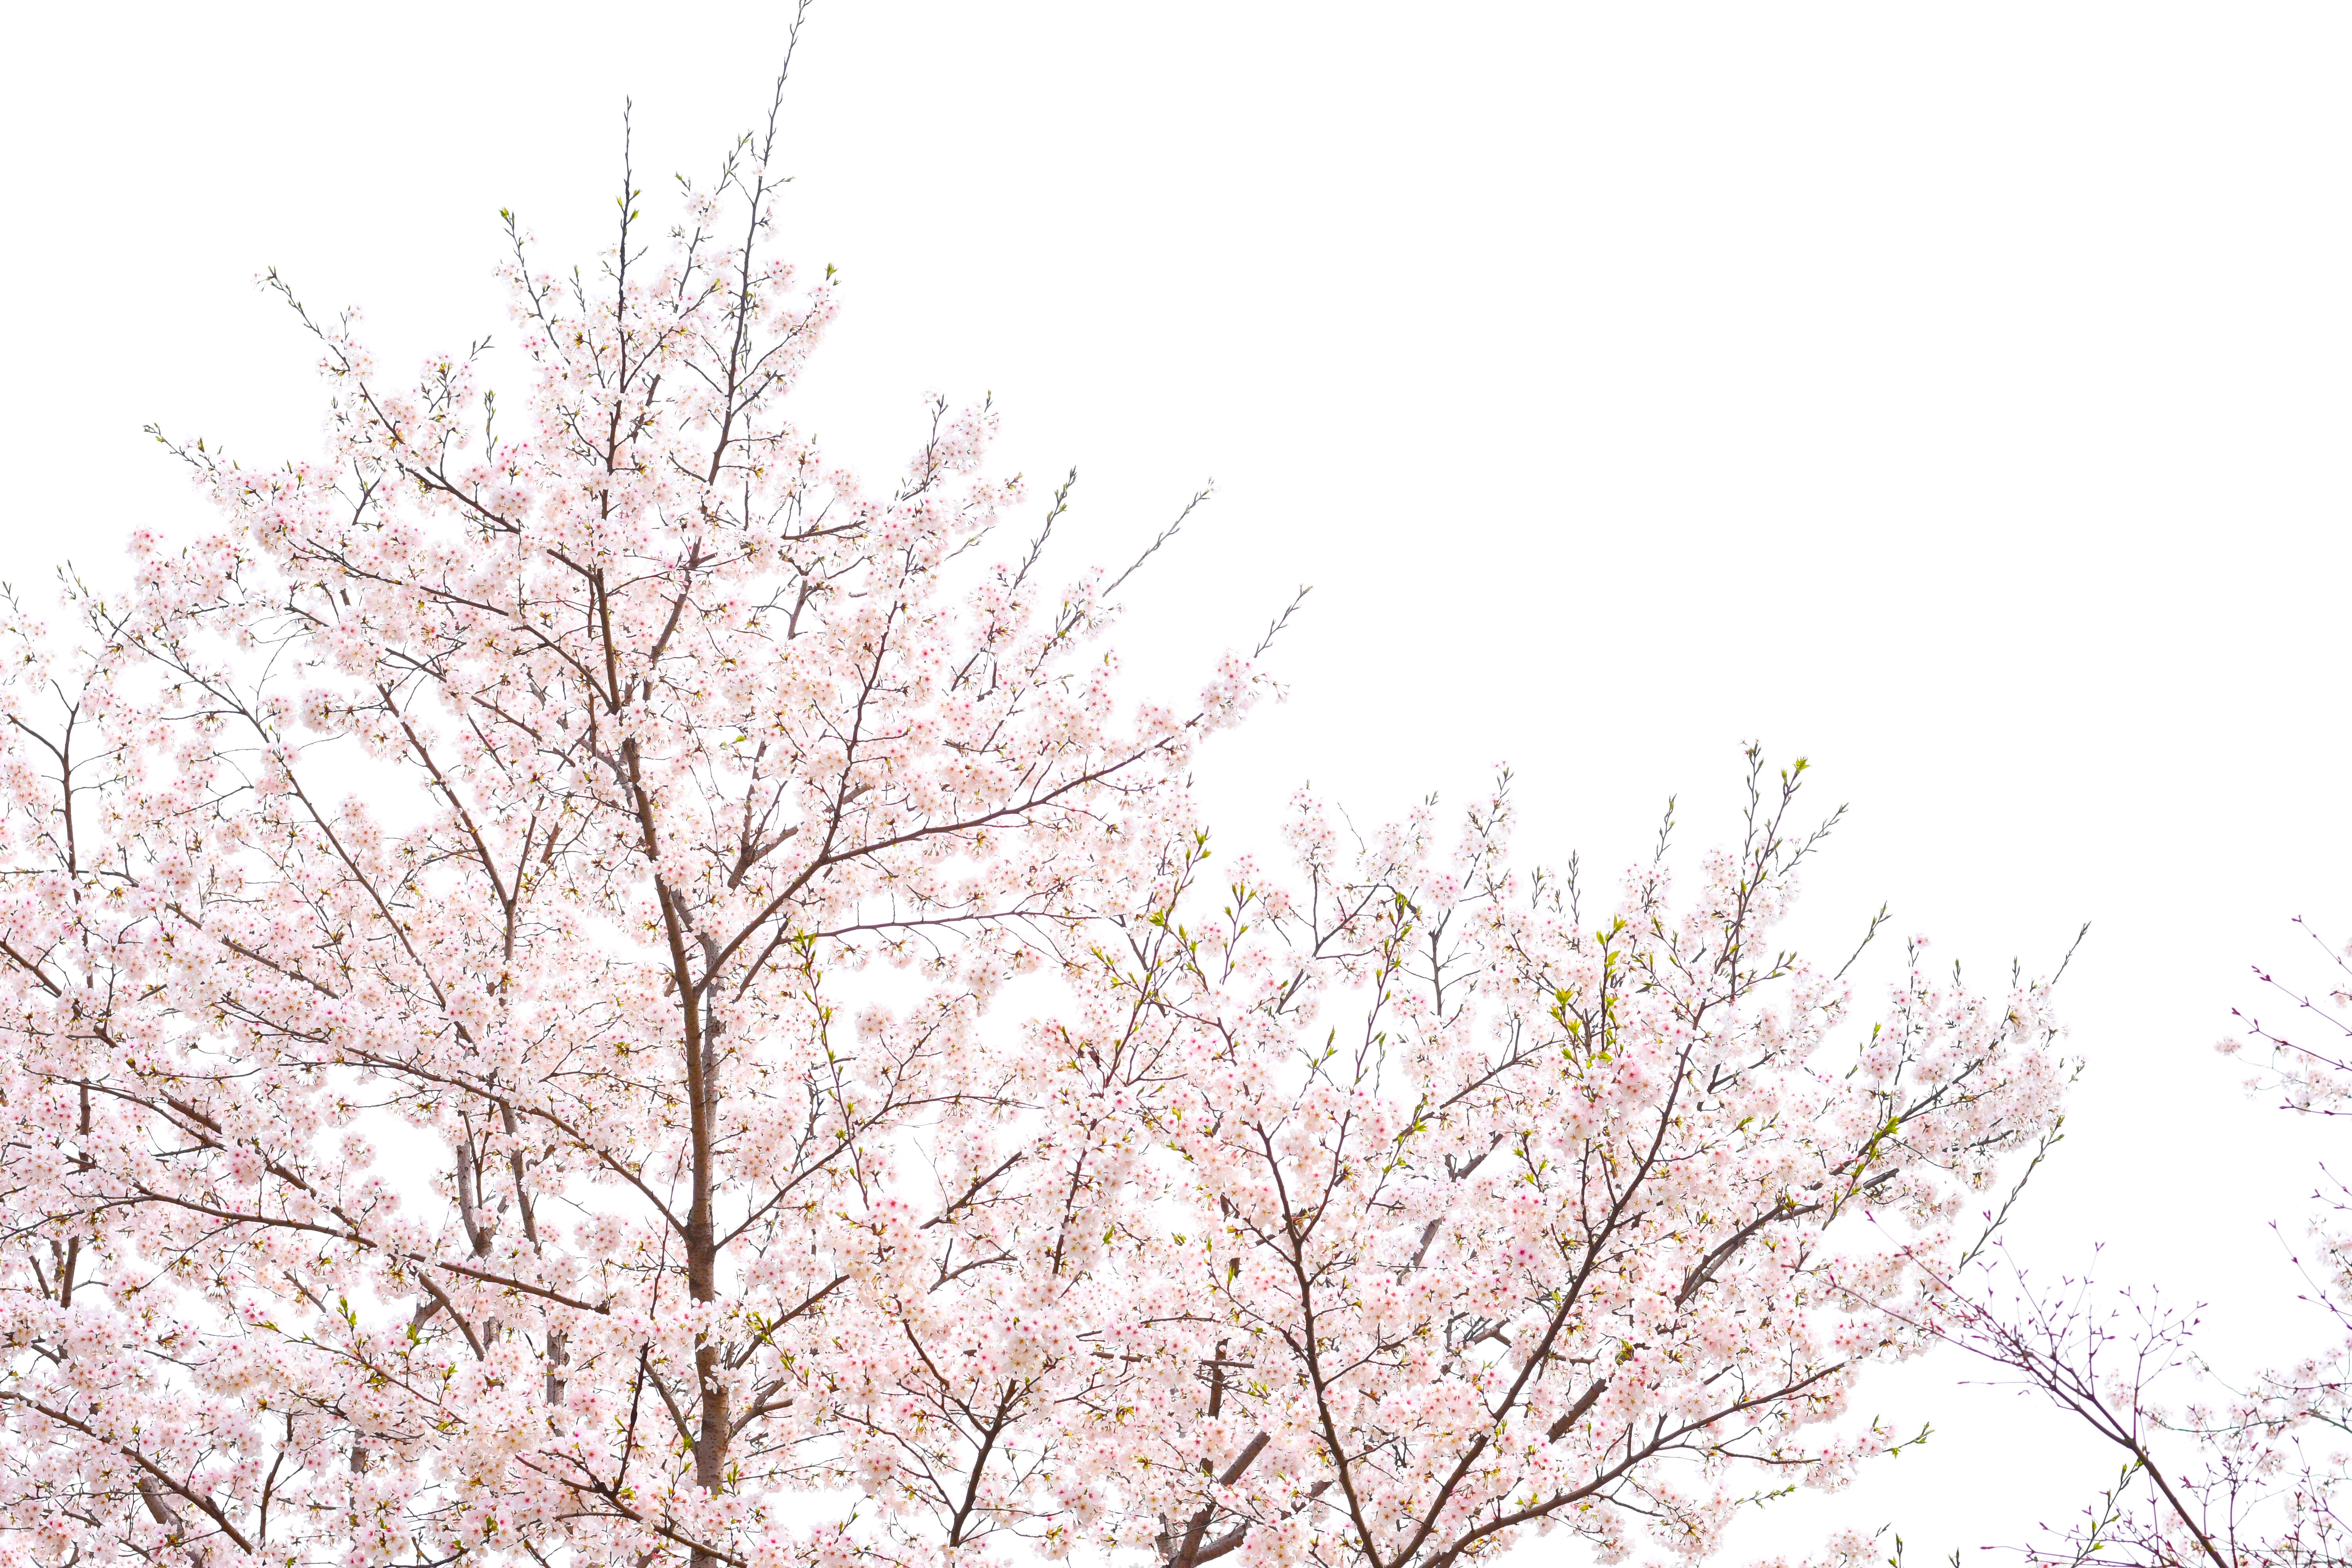 General 6000x4000 cherry blossom plants trees